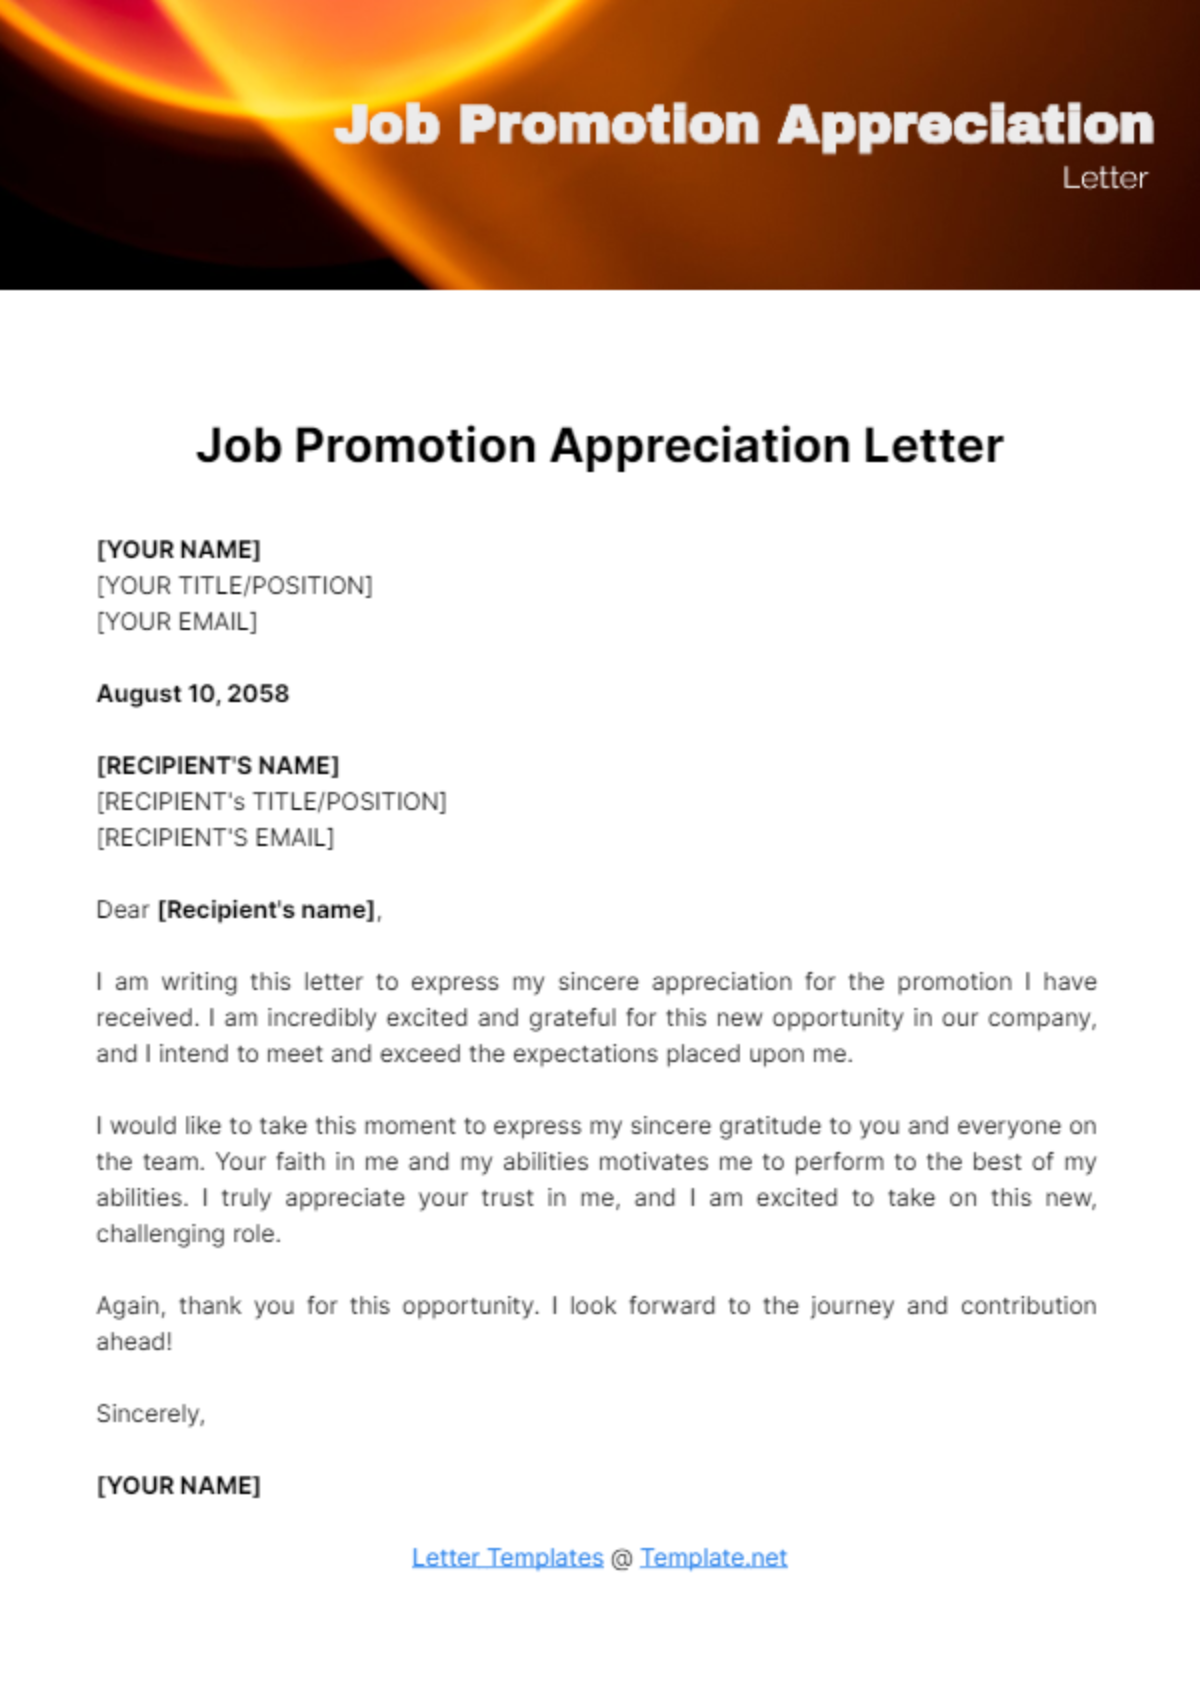 Job Promotion Appreciation Letter Template